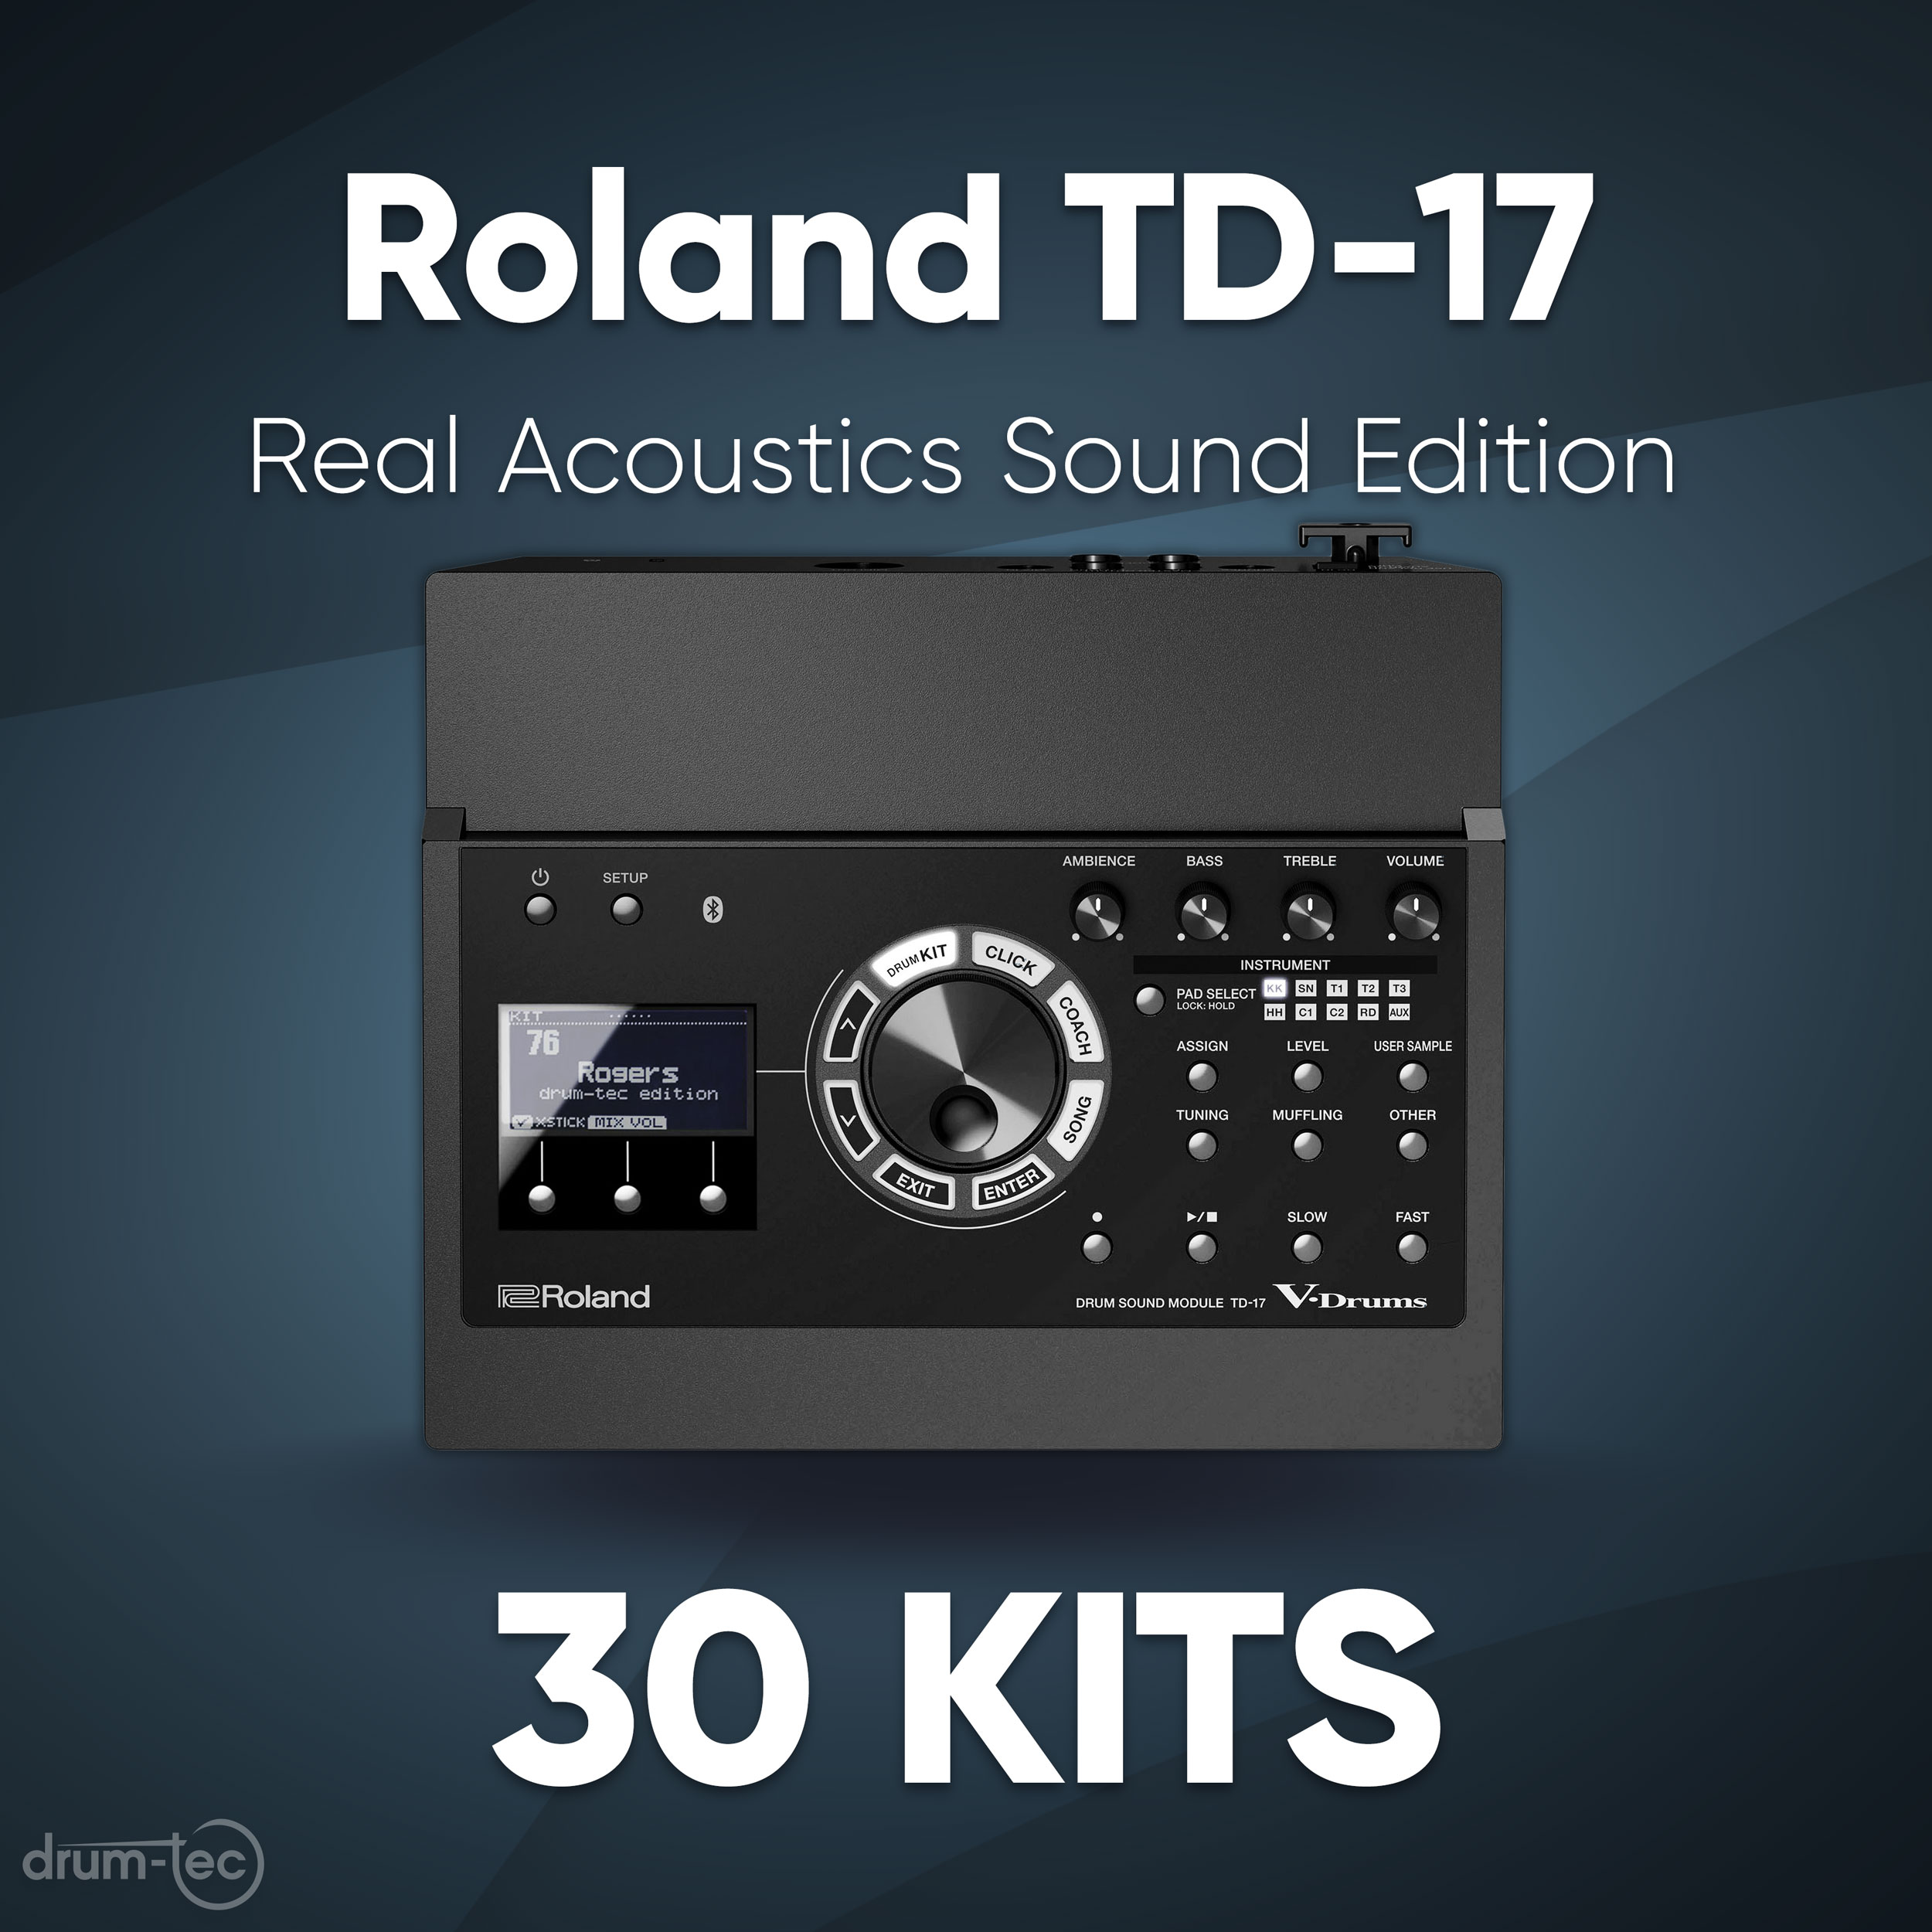 Real Acoustics Sound Edition Roland TD-17 [Download] | drum-tec